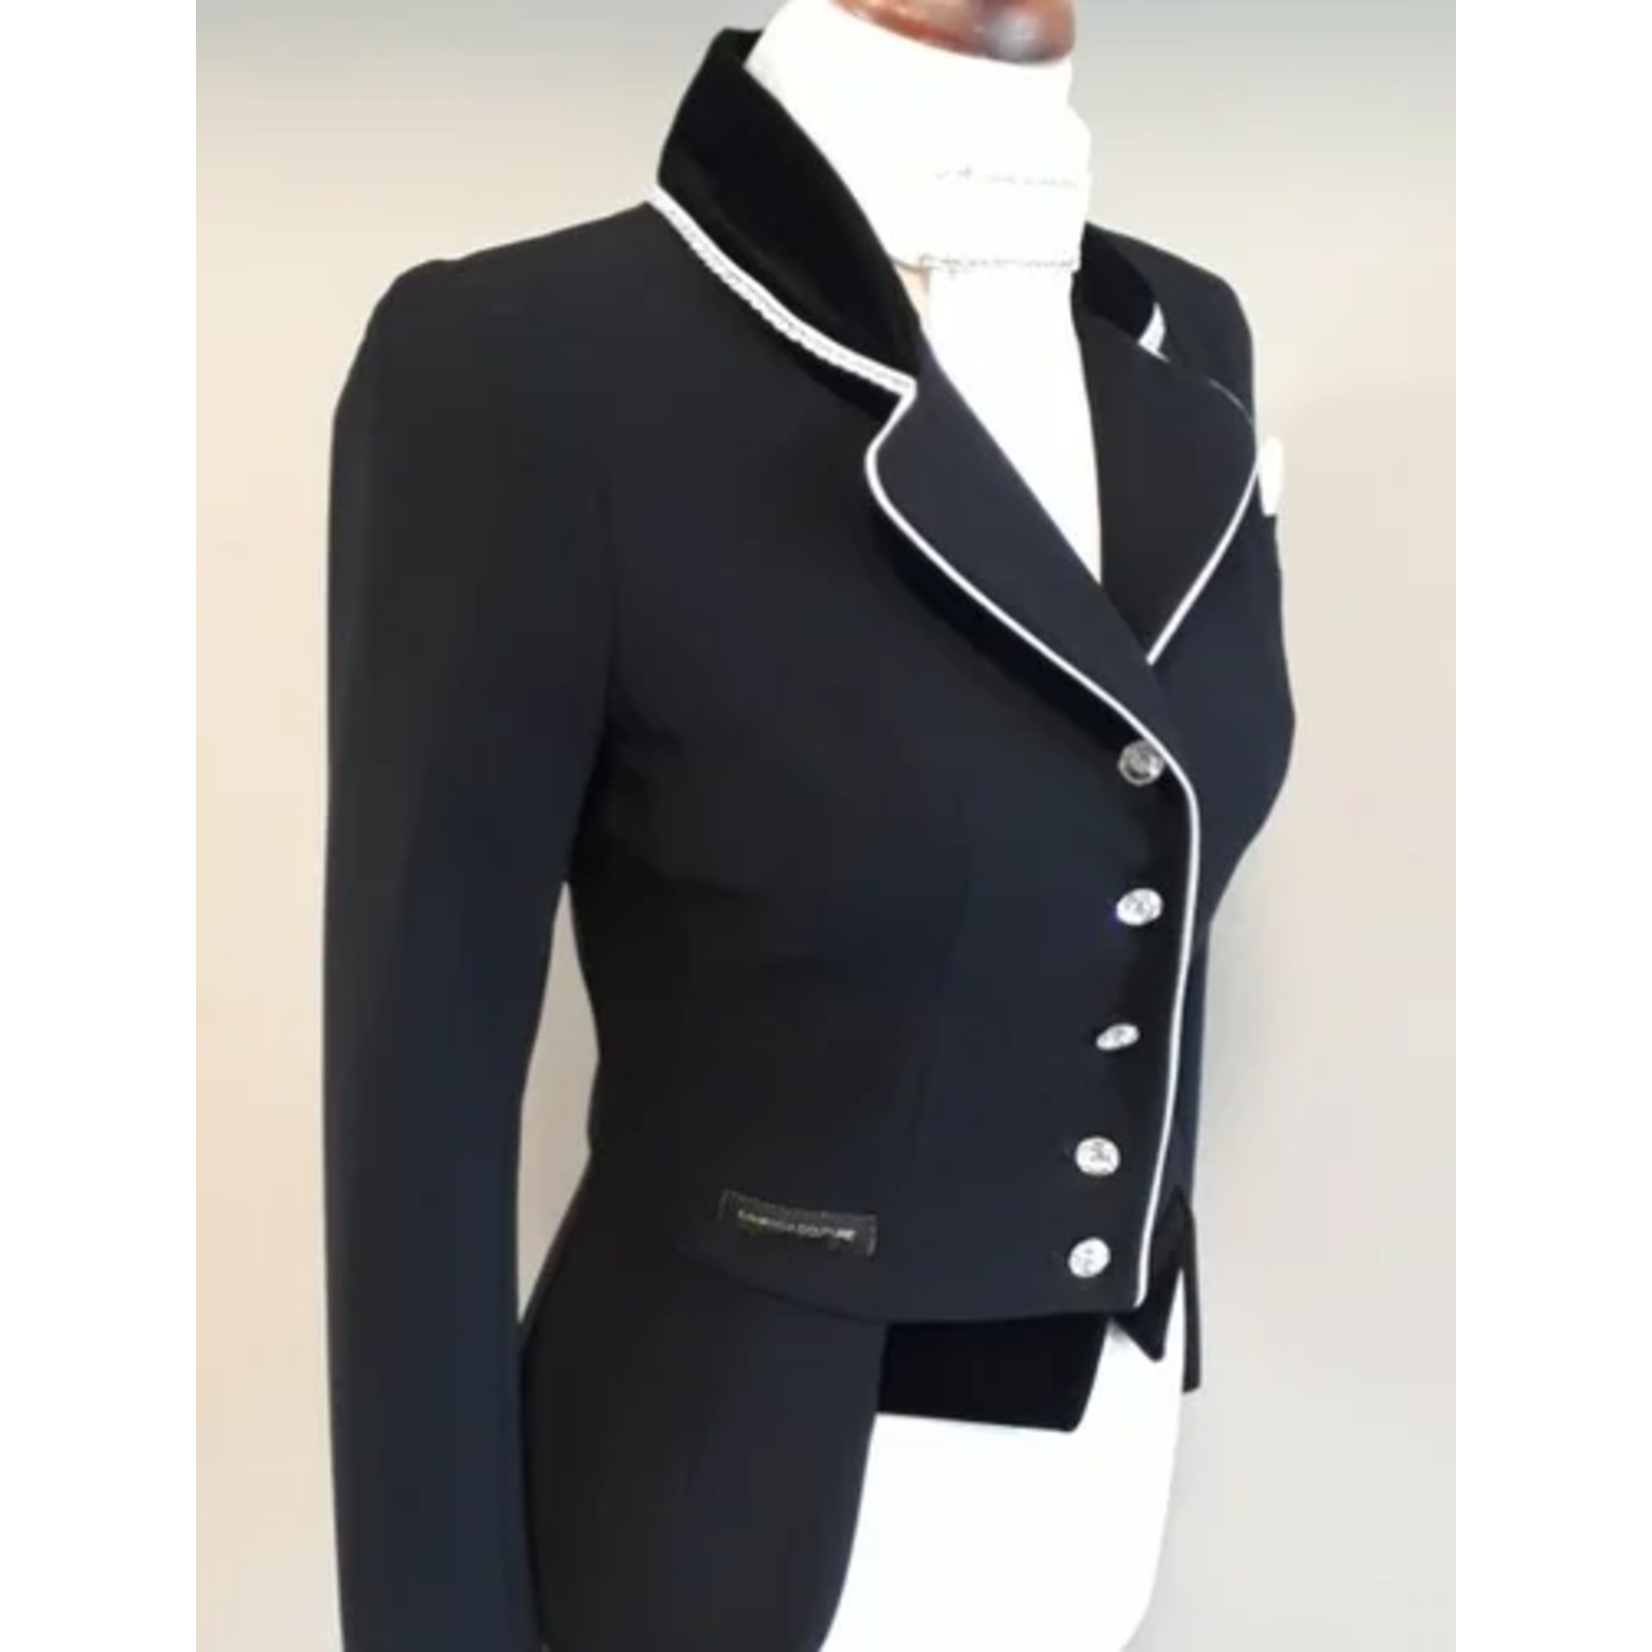 Lamantia Couture Nederland Lamantia Couture verkorte slipjas simpel zwart-wit met pochet